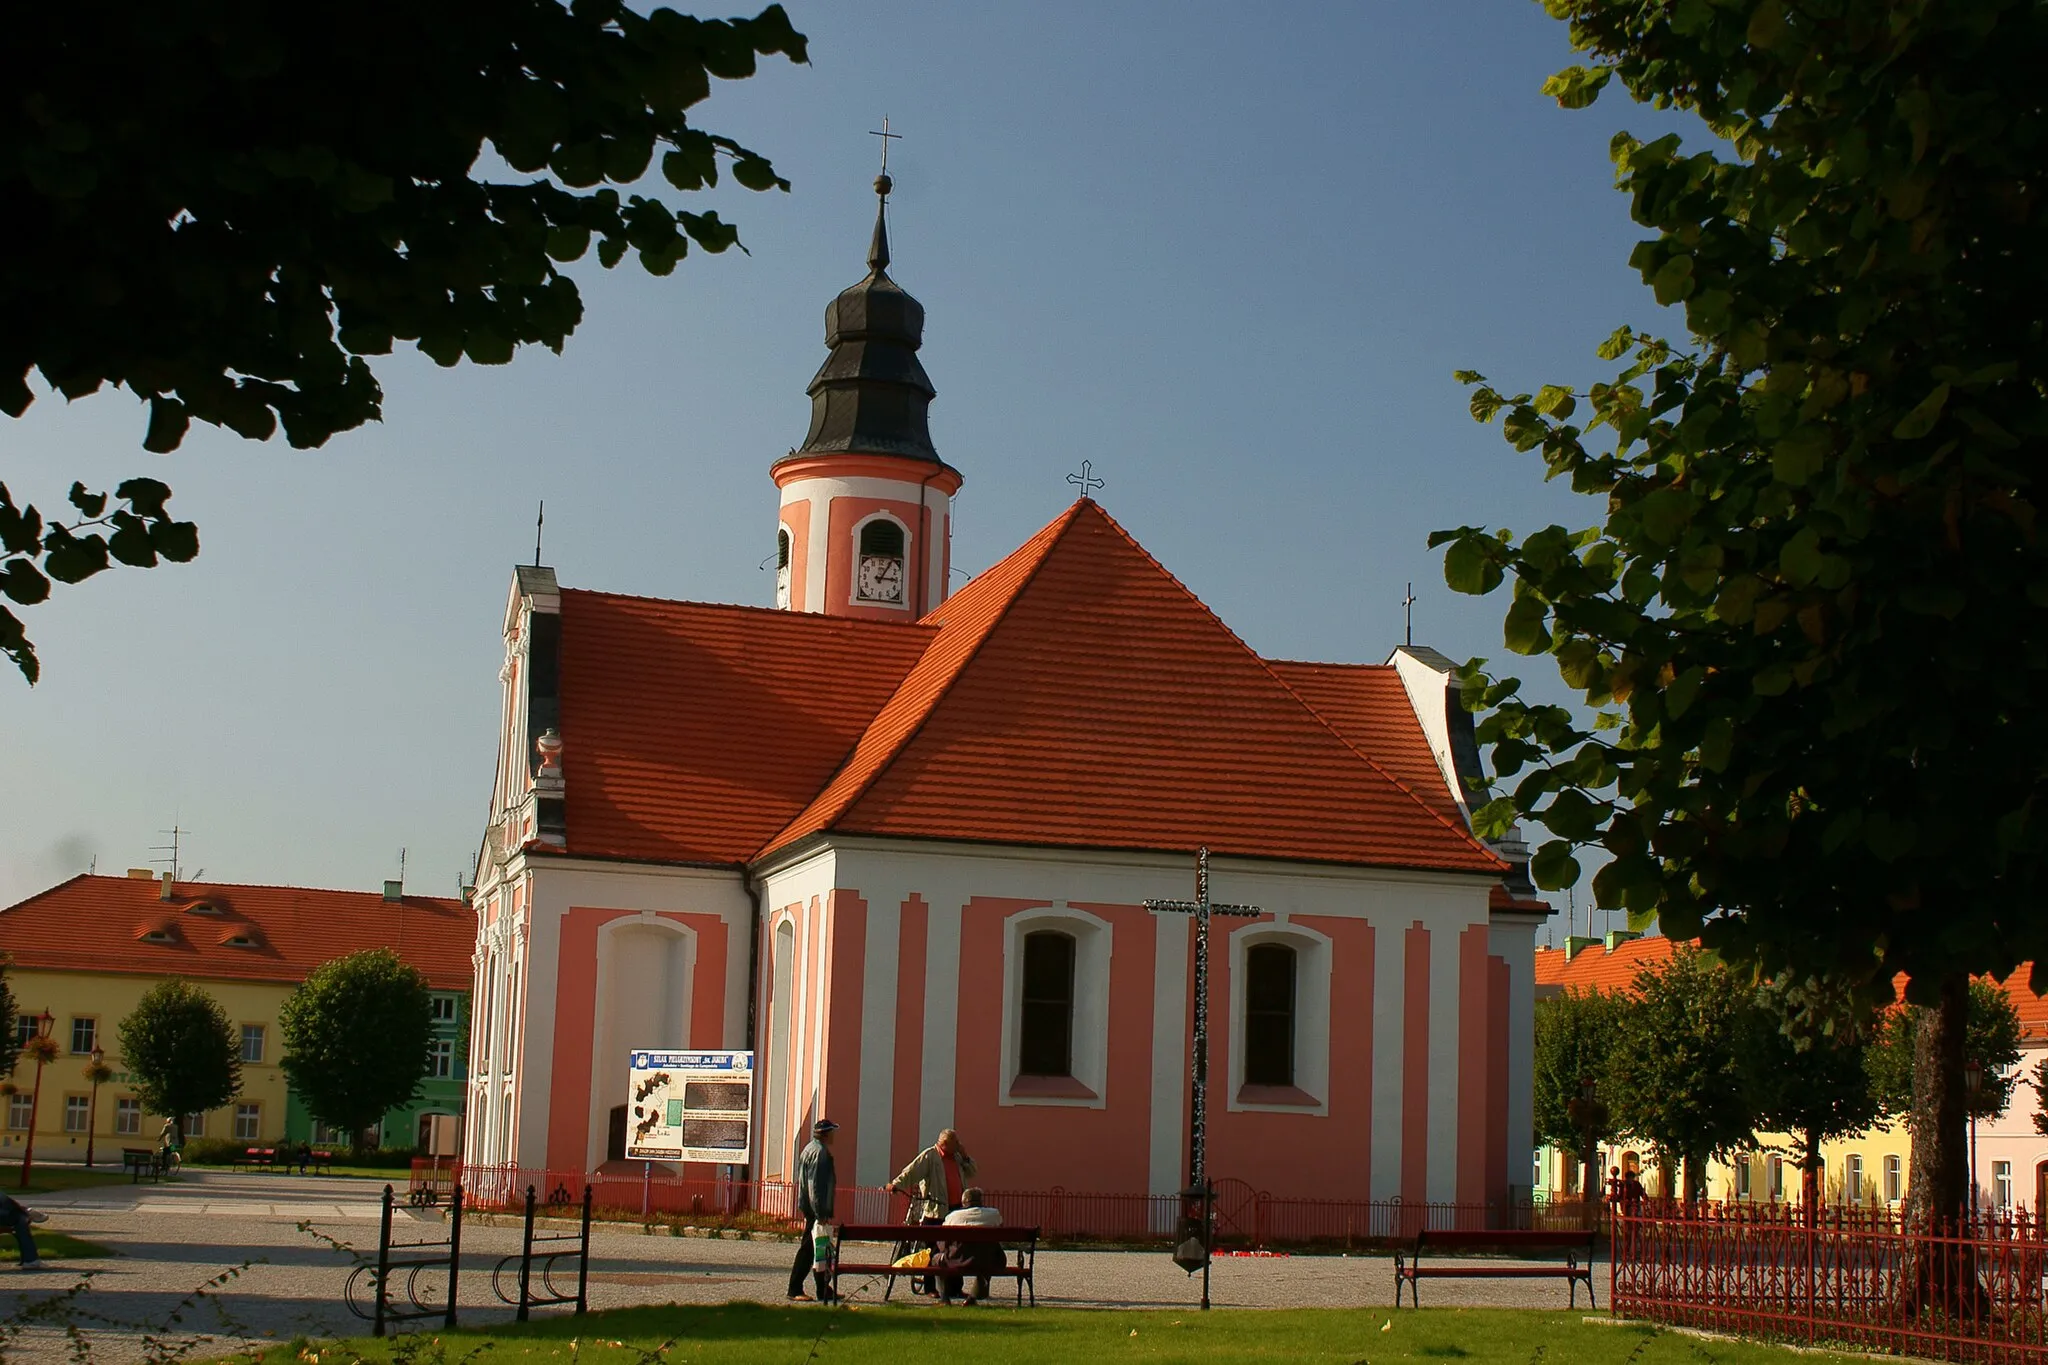 Image of Chocianów